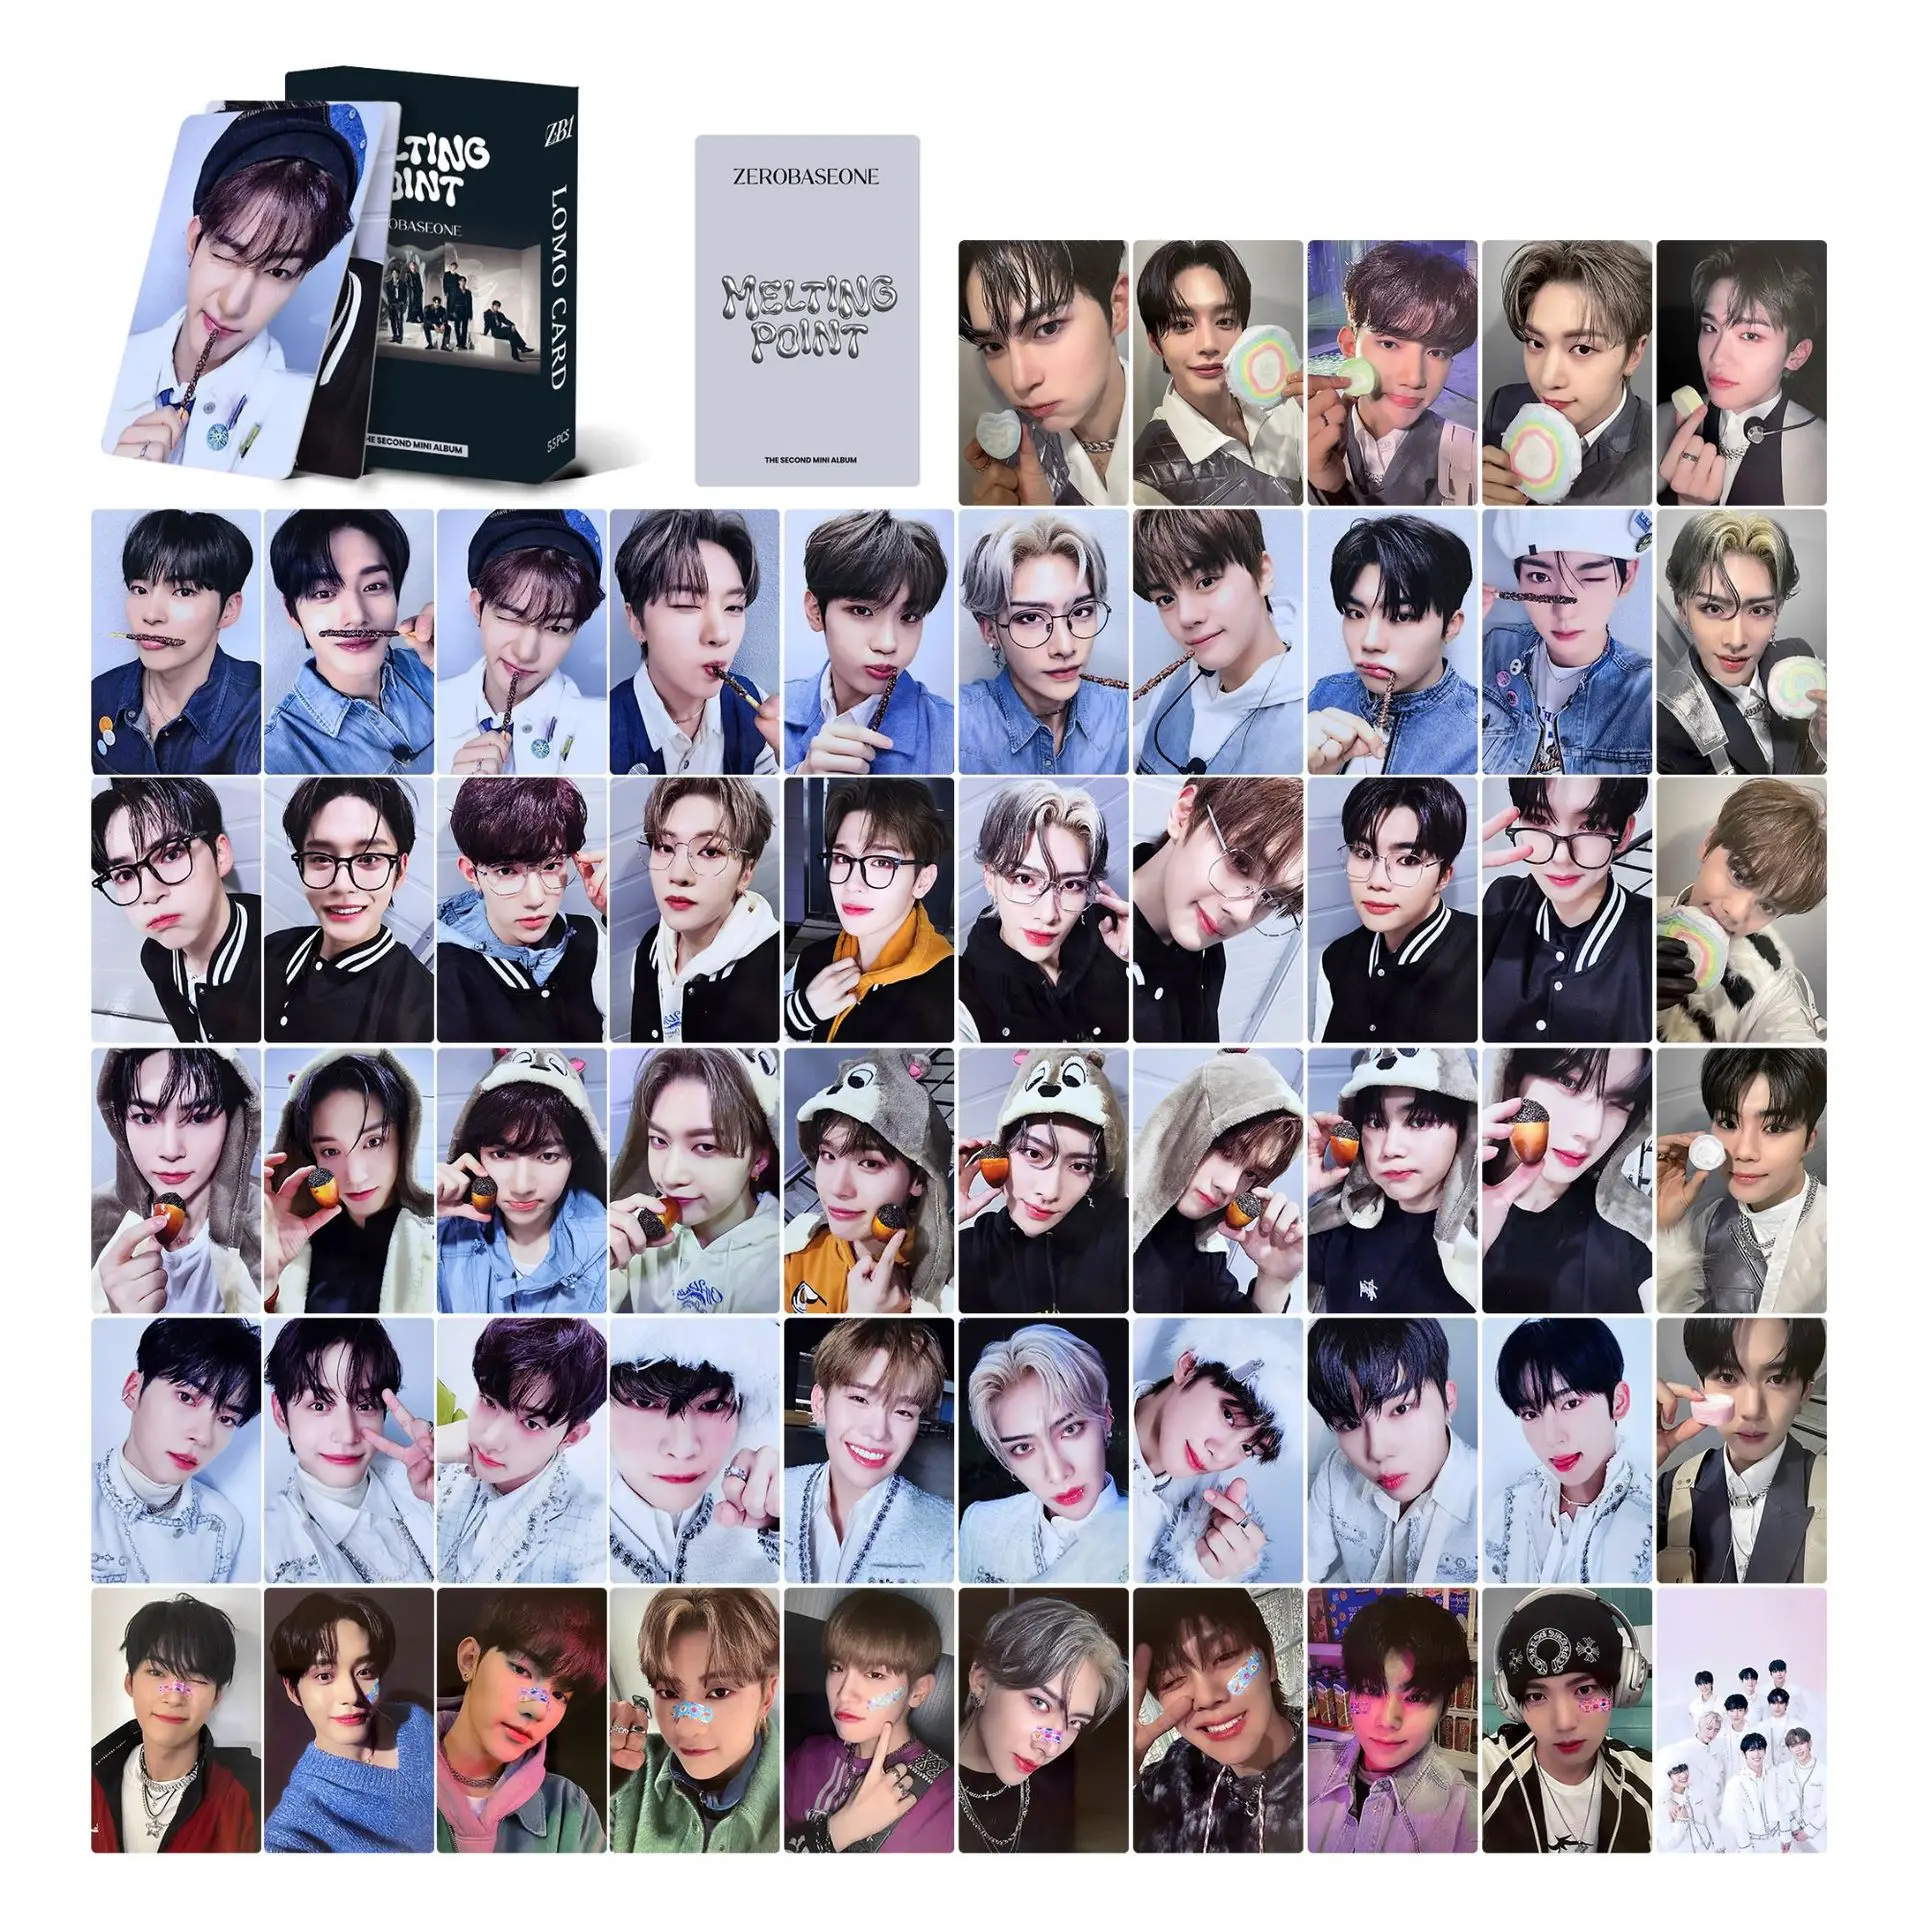 

55Pcs/Set KPOP ZB1 LOMO Cards ZEROBASEONE MELTING POINT Album Photocards ZHANGHAO HANBIN MATTHEW RICKY Boxed Postcard Fans Gift